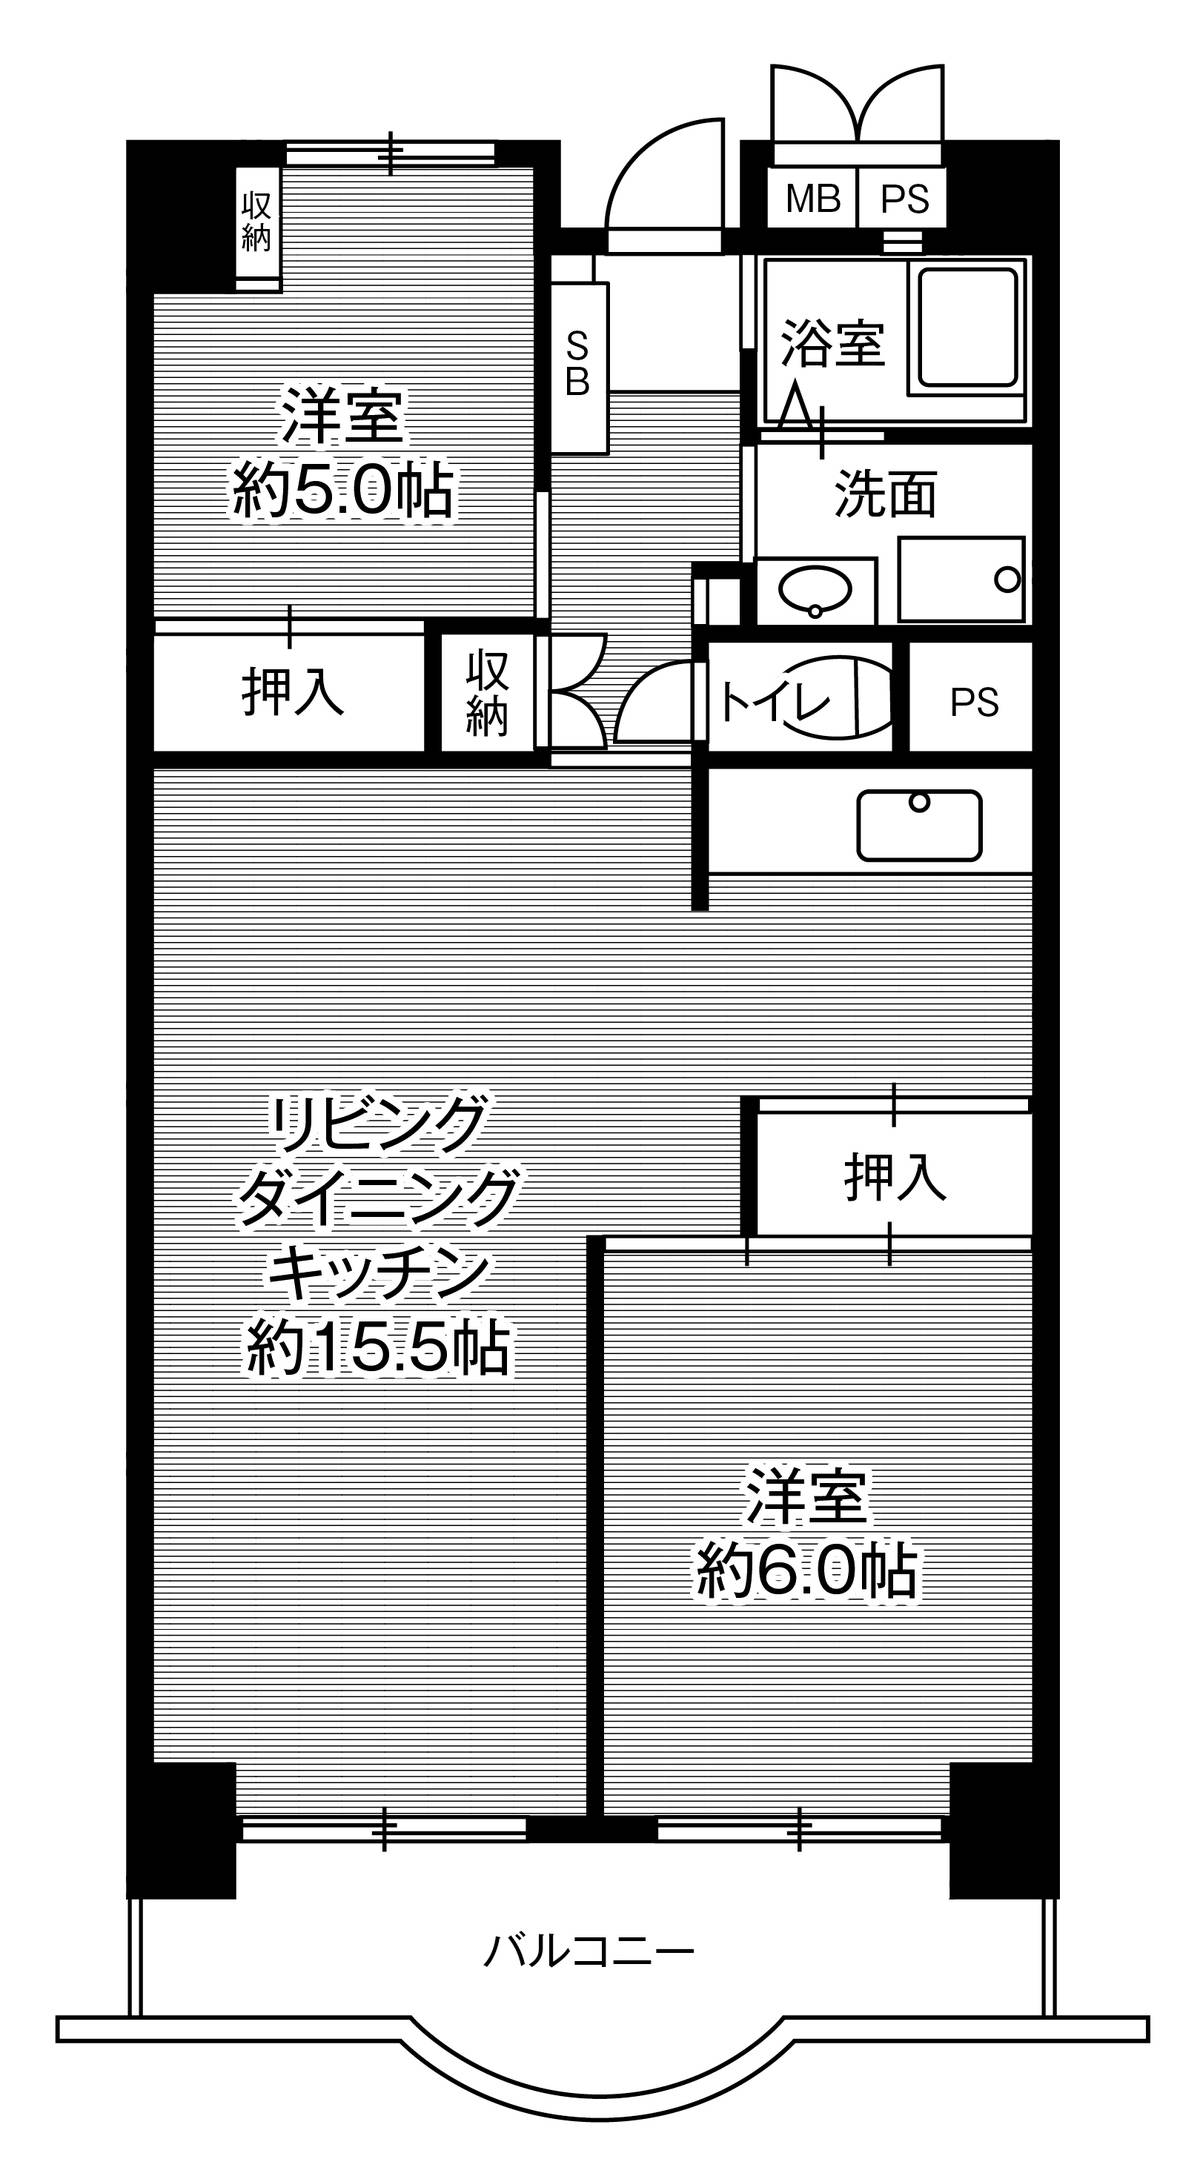 2LDK floorplan of Village House Hamamatsu Tower in Chuo-ku